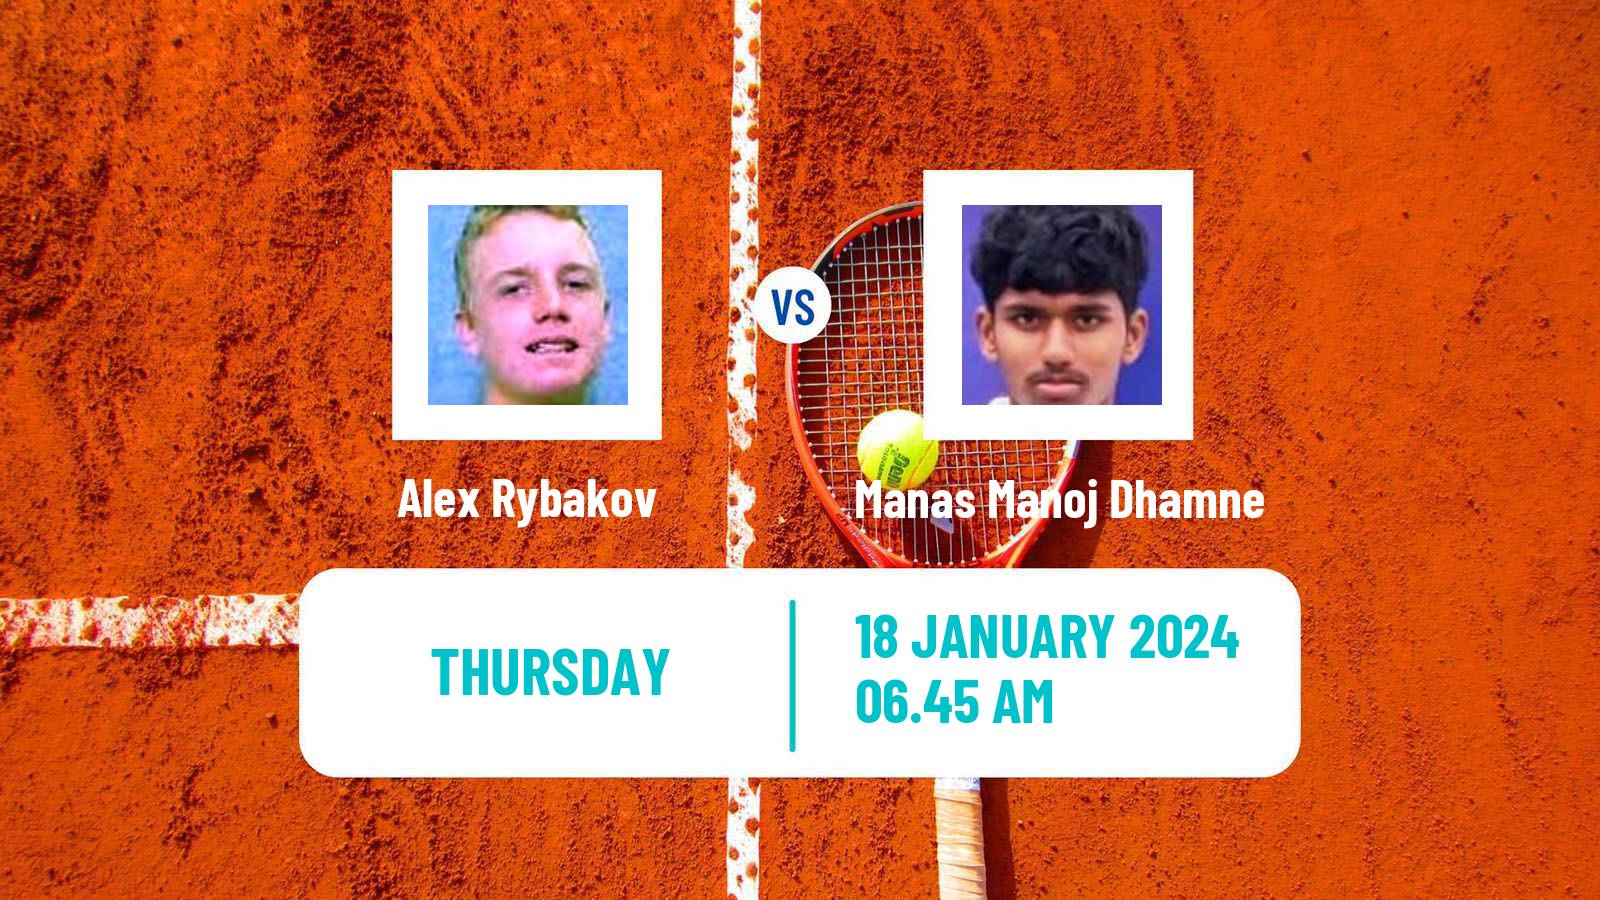 Tennis ITF M15 Manacor 2 Men Alex Rybakov - Manas Manoj Dhamne